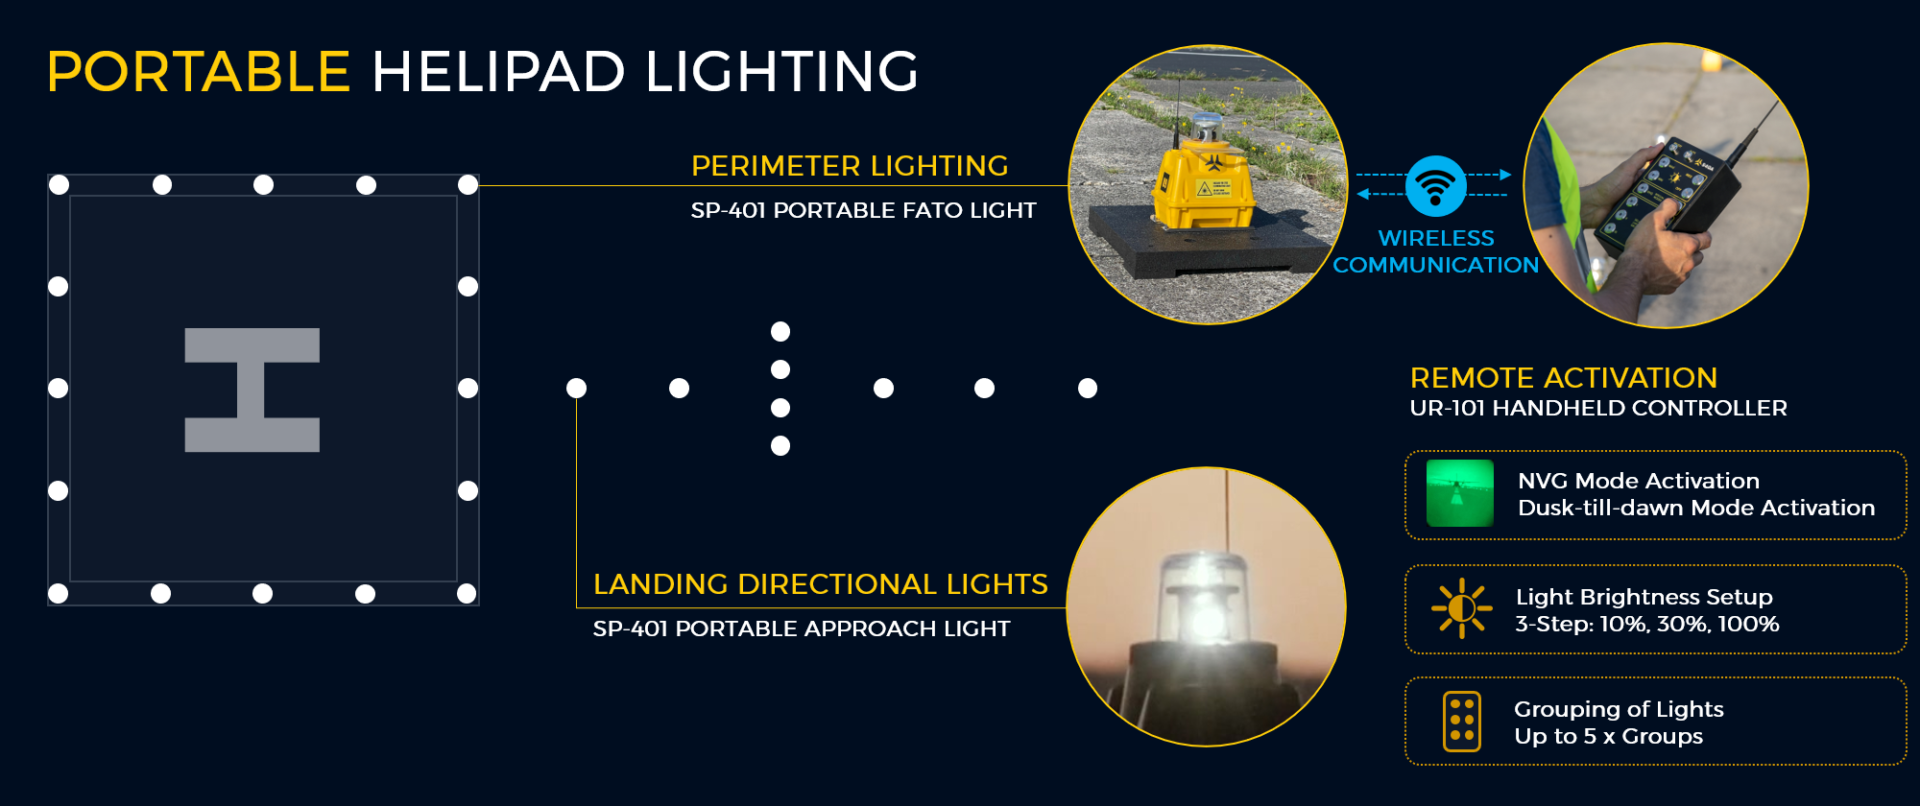 Portable Helipad Lighting Infographic